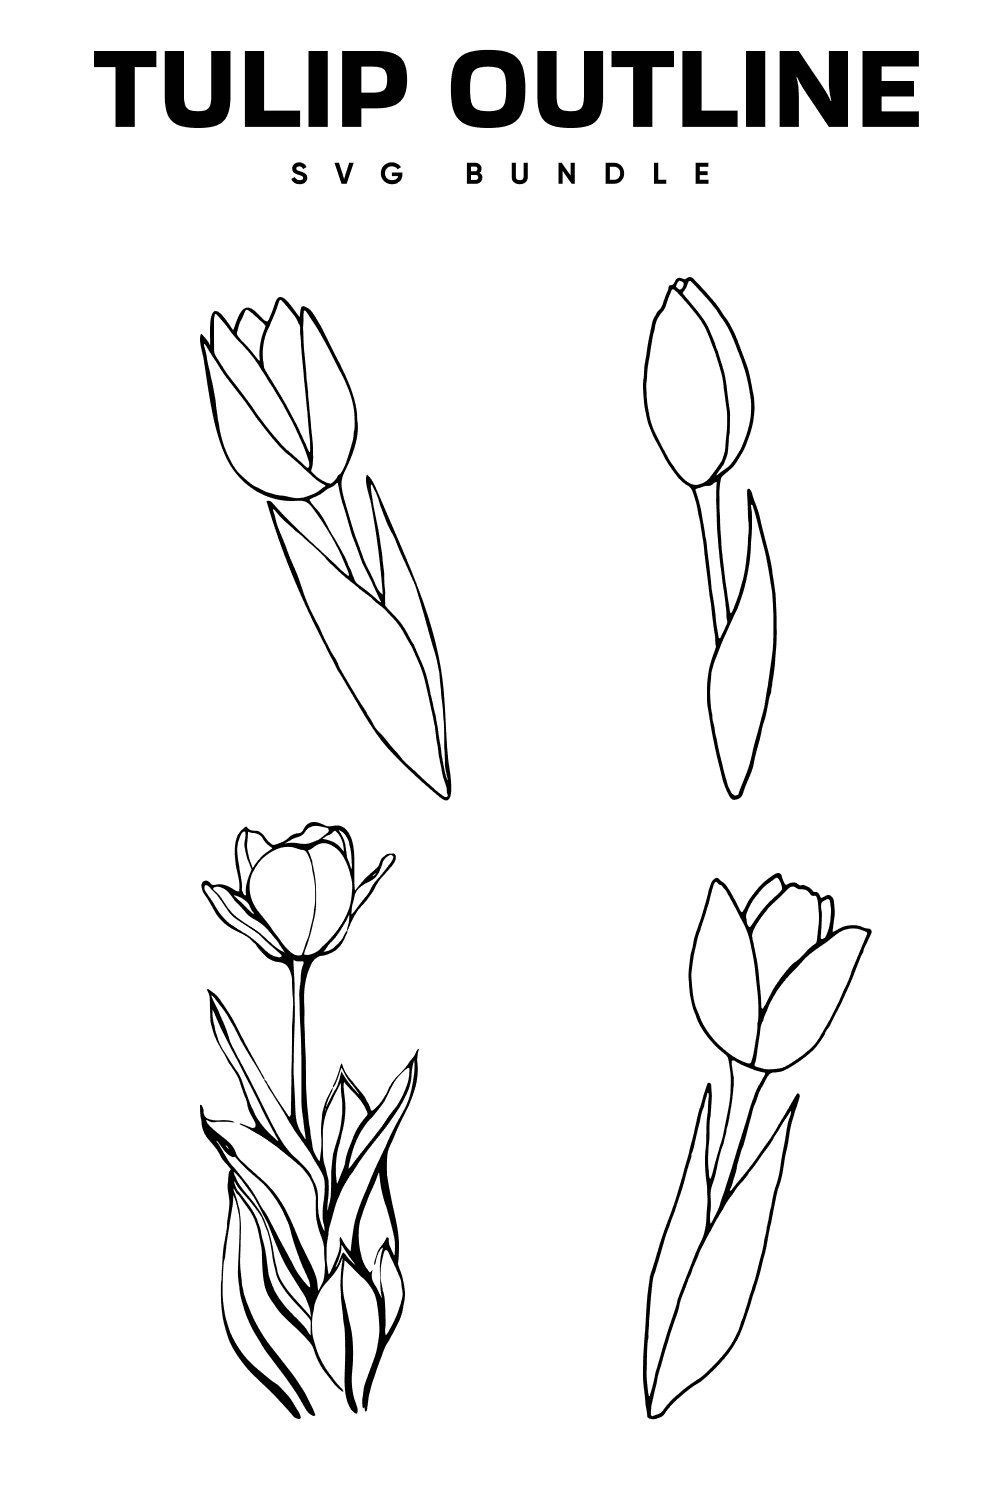 Tulip outline svg bundle, picture for pinterest 1000x1500.